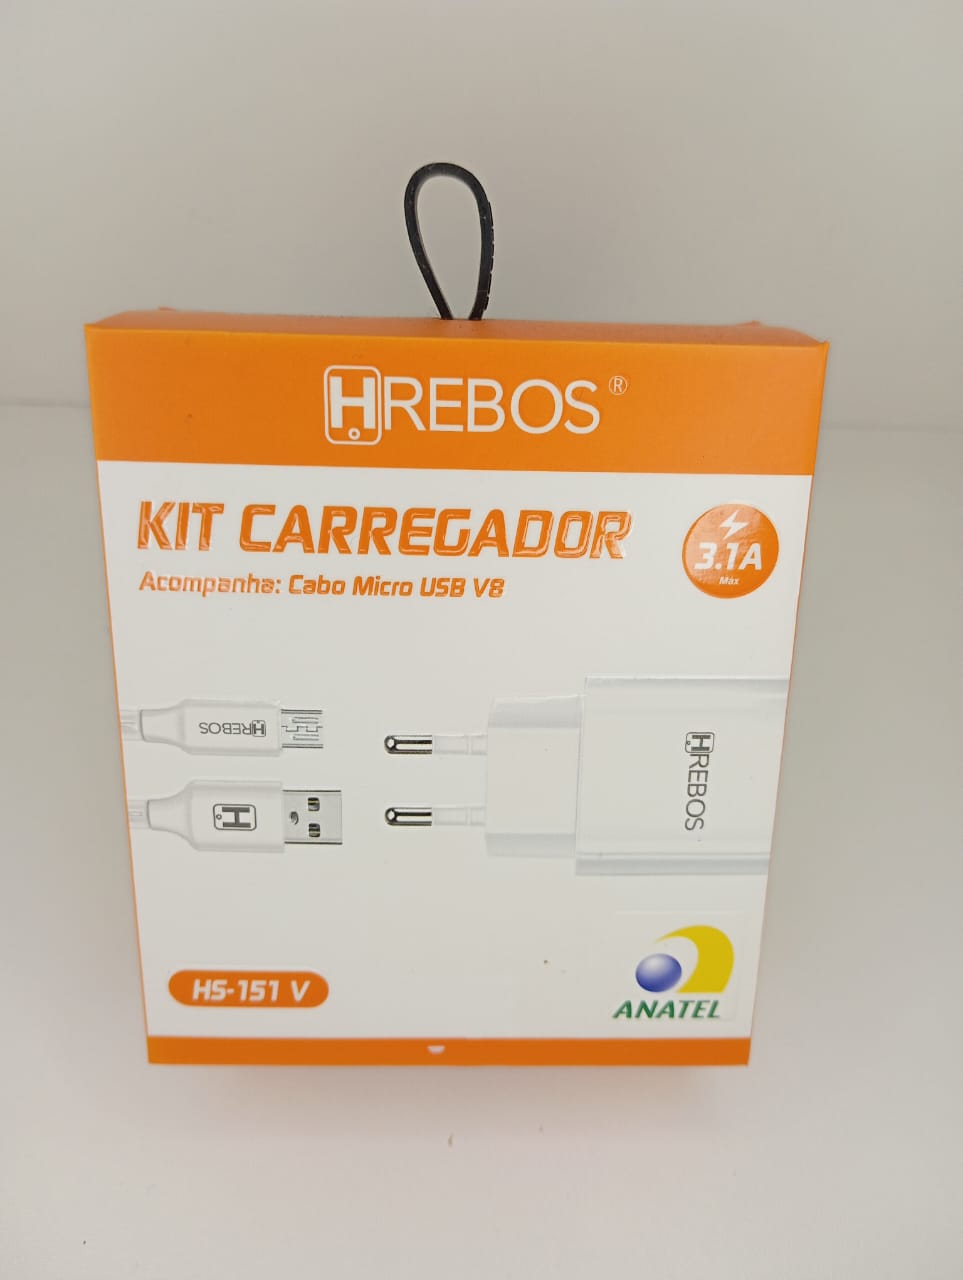 Kit Carregador Hrebos 3.1A Cabo Usb V8 Hs-151V Branco